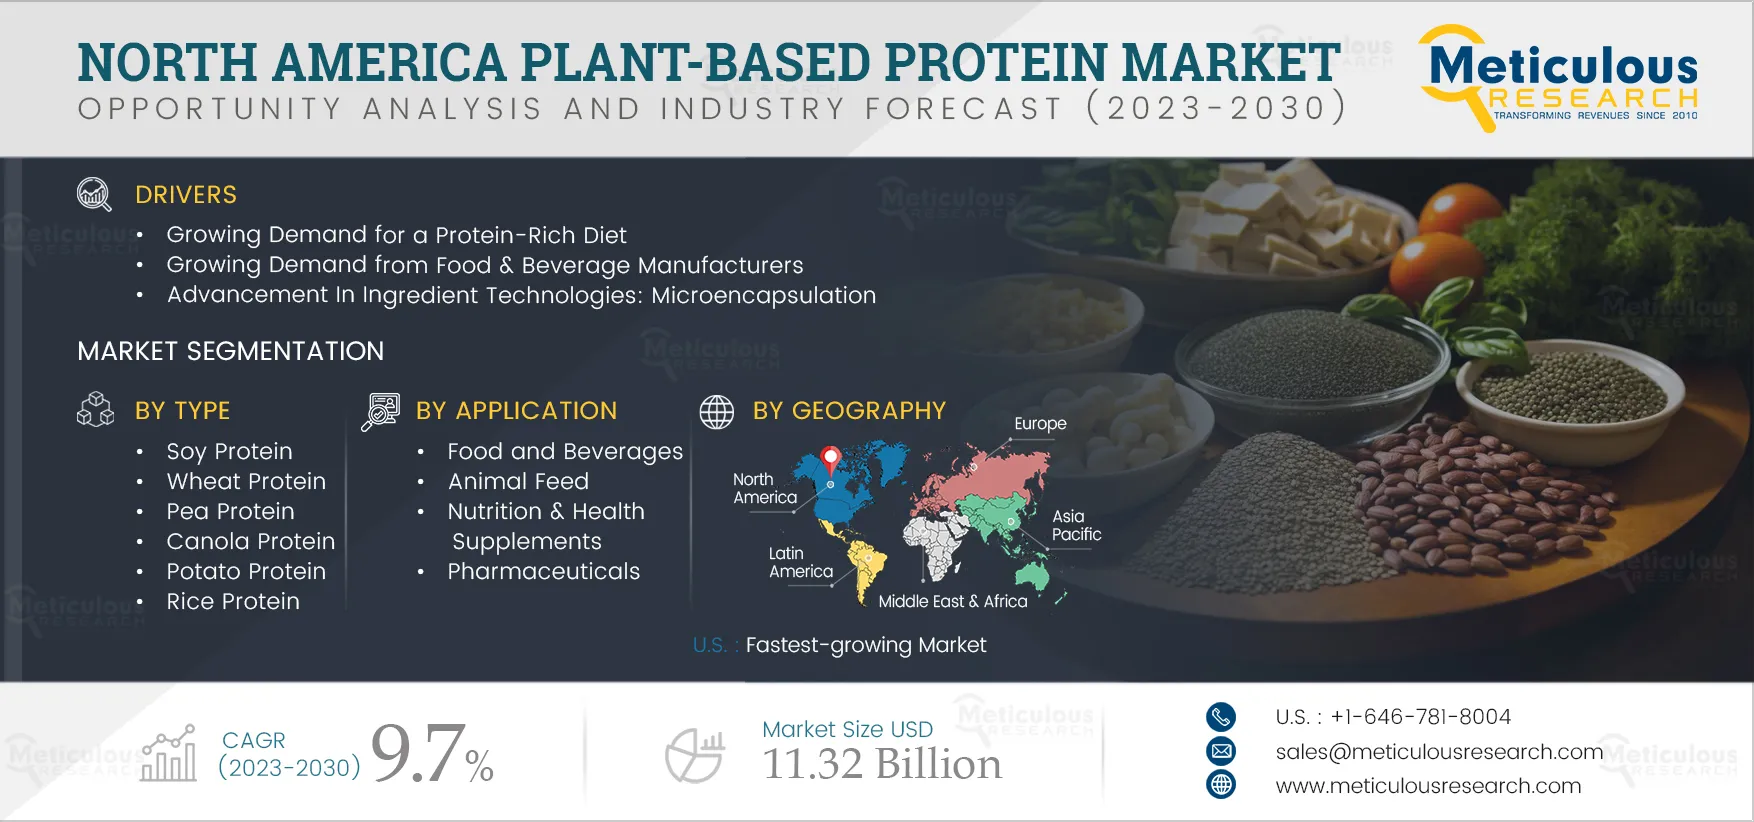 North America Plant-based Protein Market